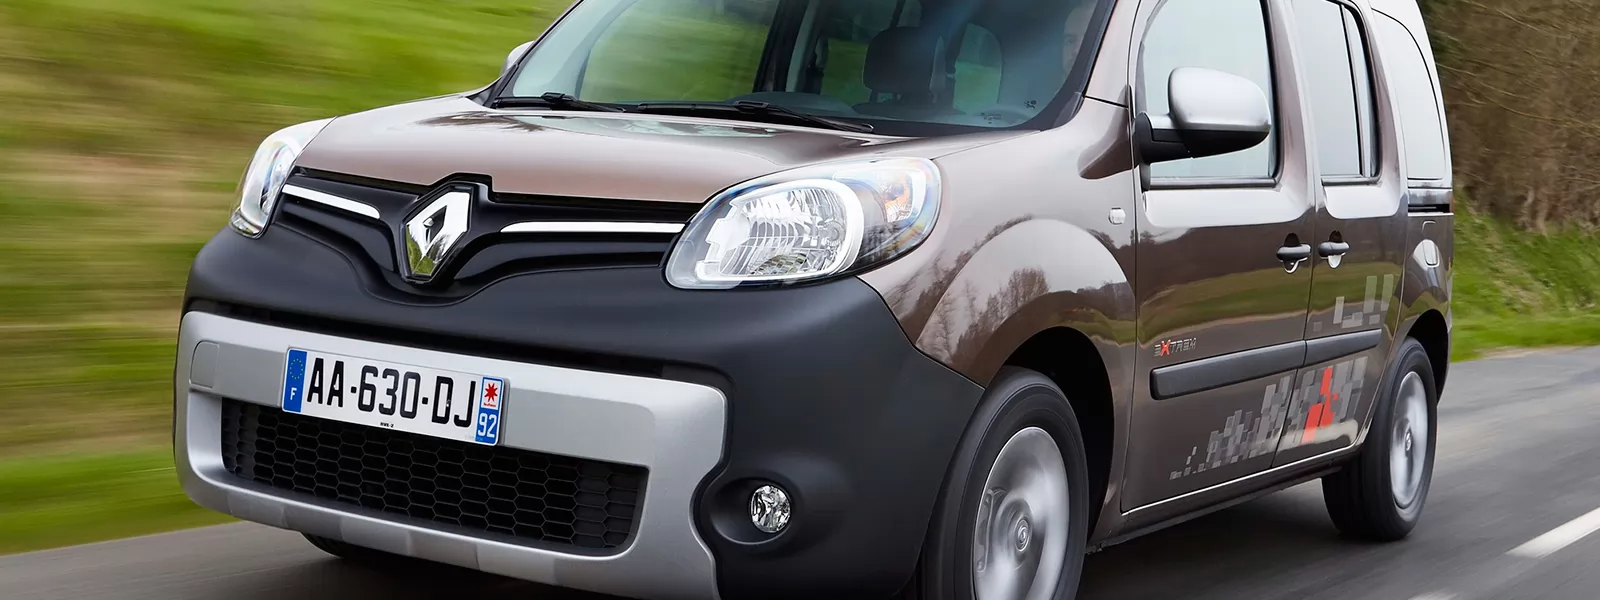 Renault Kangoo — описание модели фото